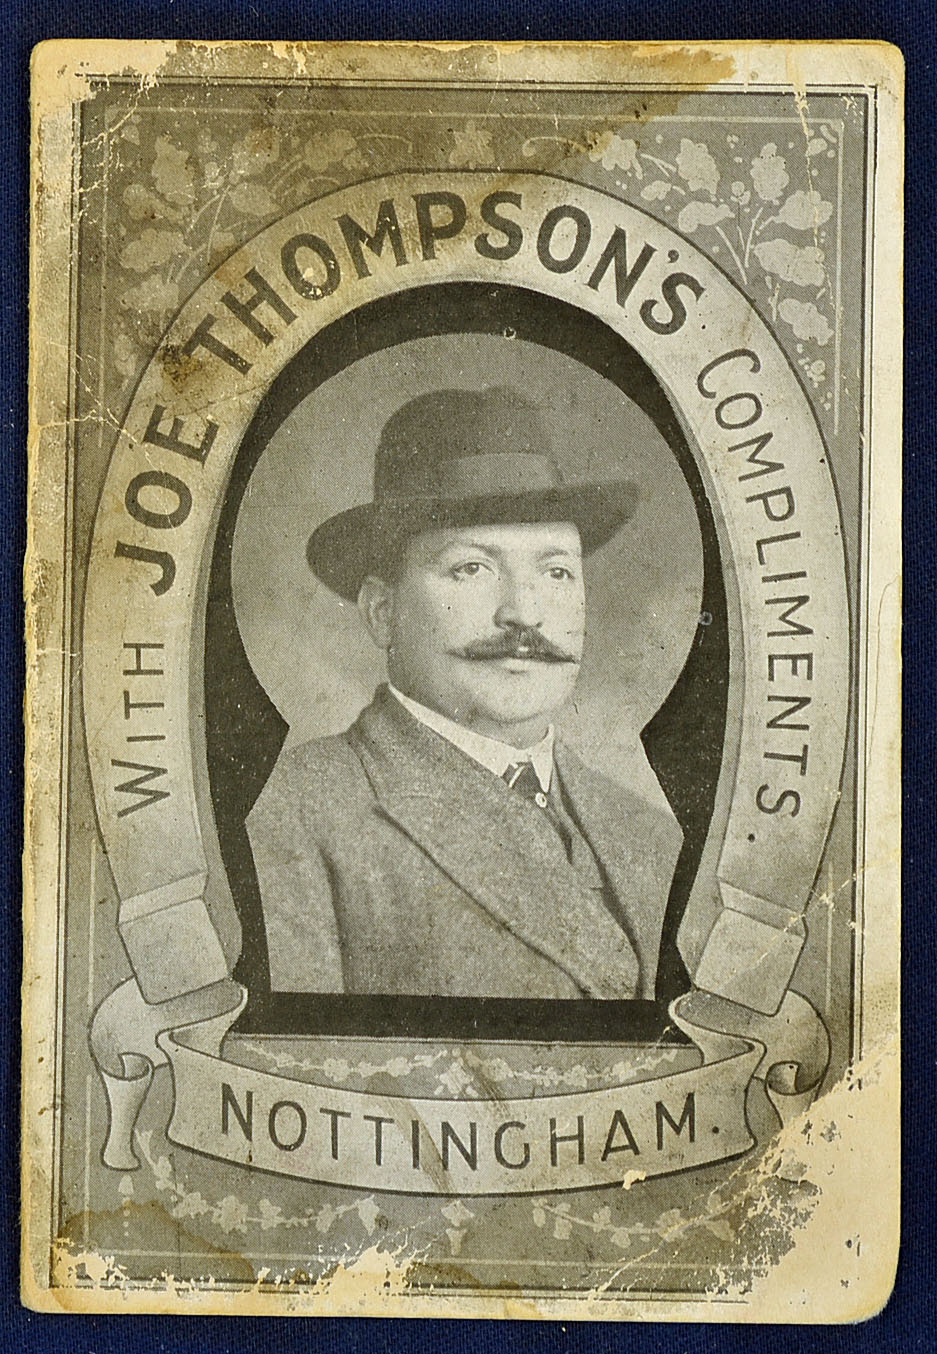 1908 Four page race fixture card with compliments Joe Thompson's Nottingham